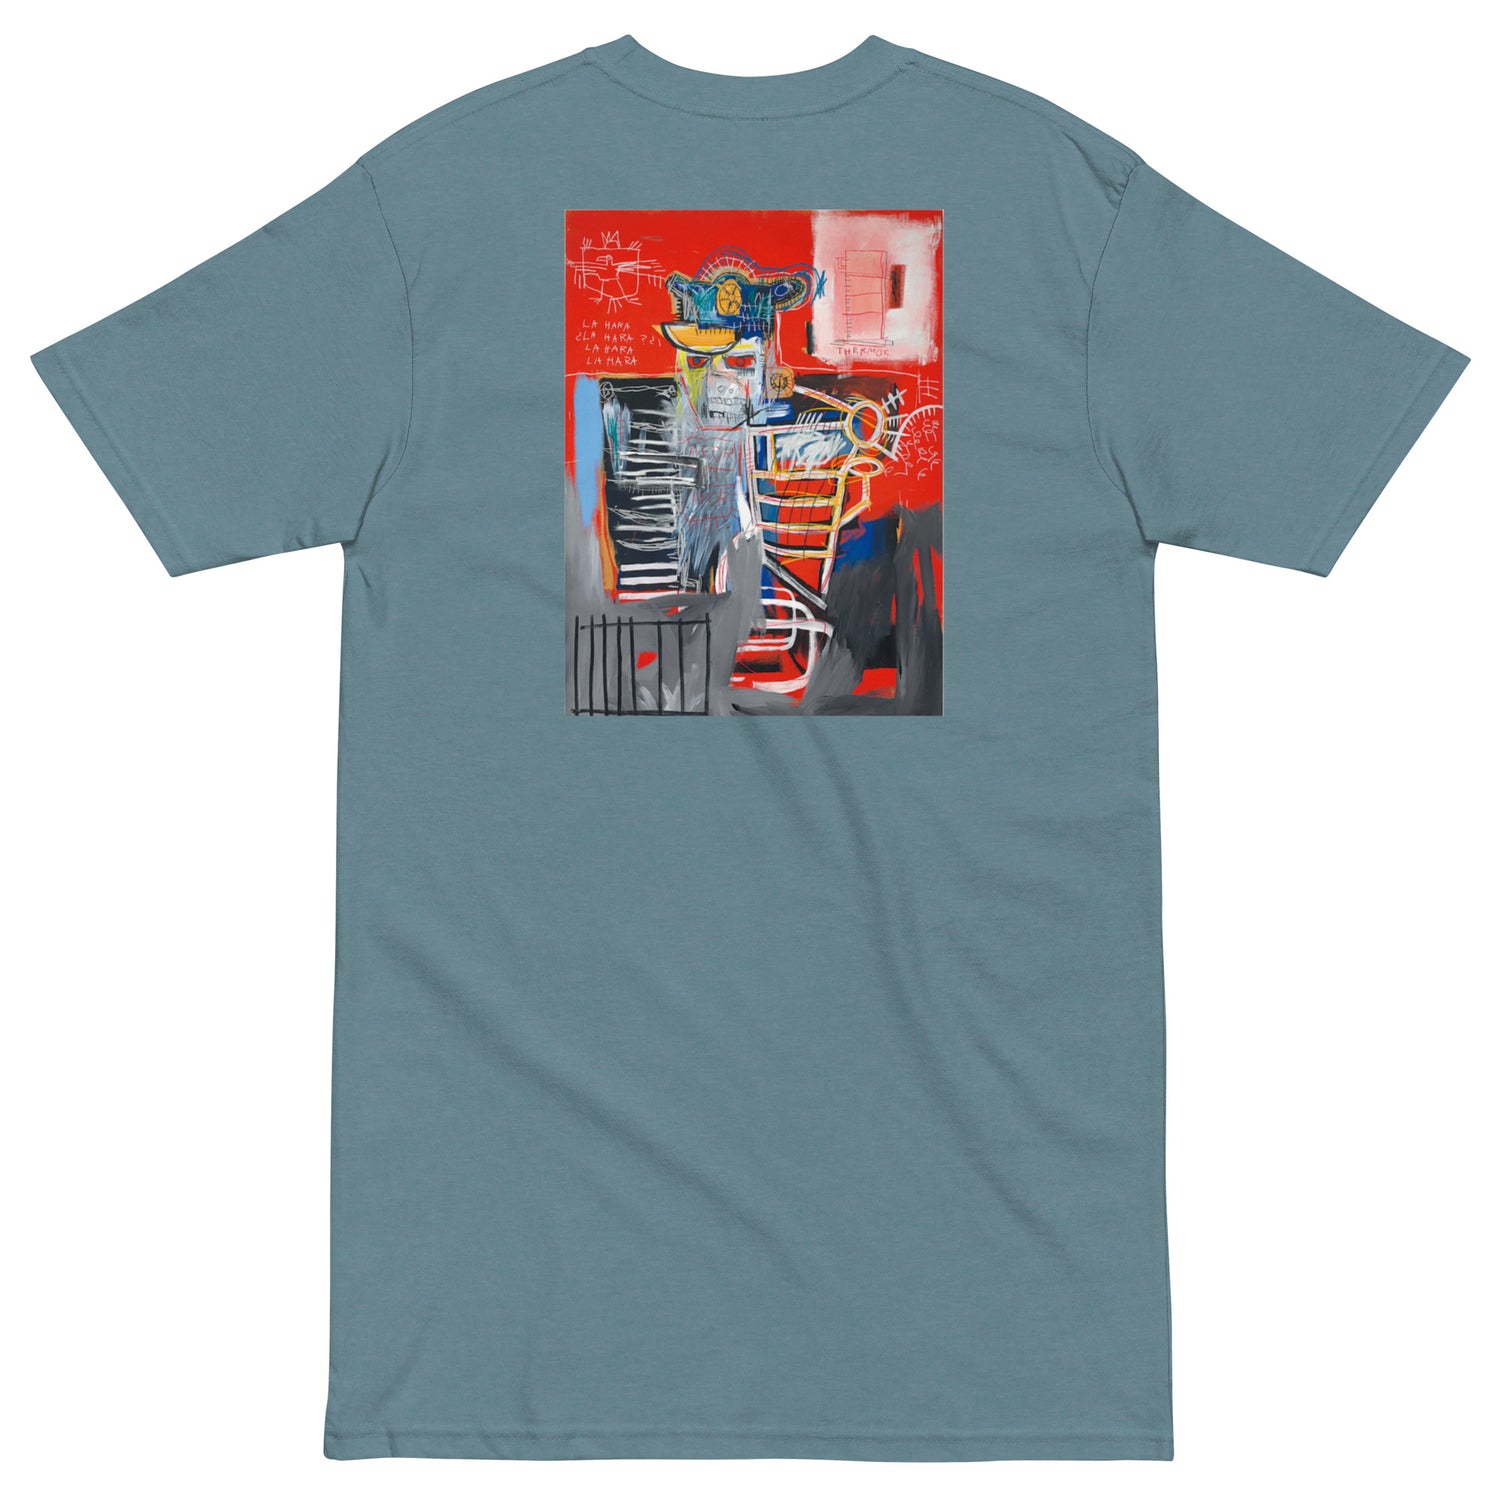 Jean-Michel Basquiat "La Hara" 1981 Artwork Embroidered + Printed Premium Streetwear Blue Agave T-shirt